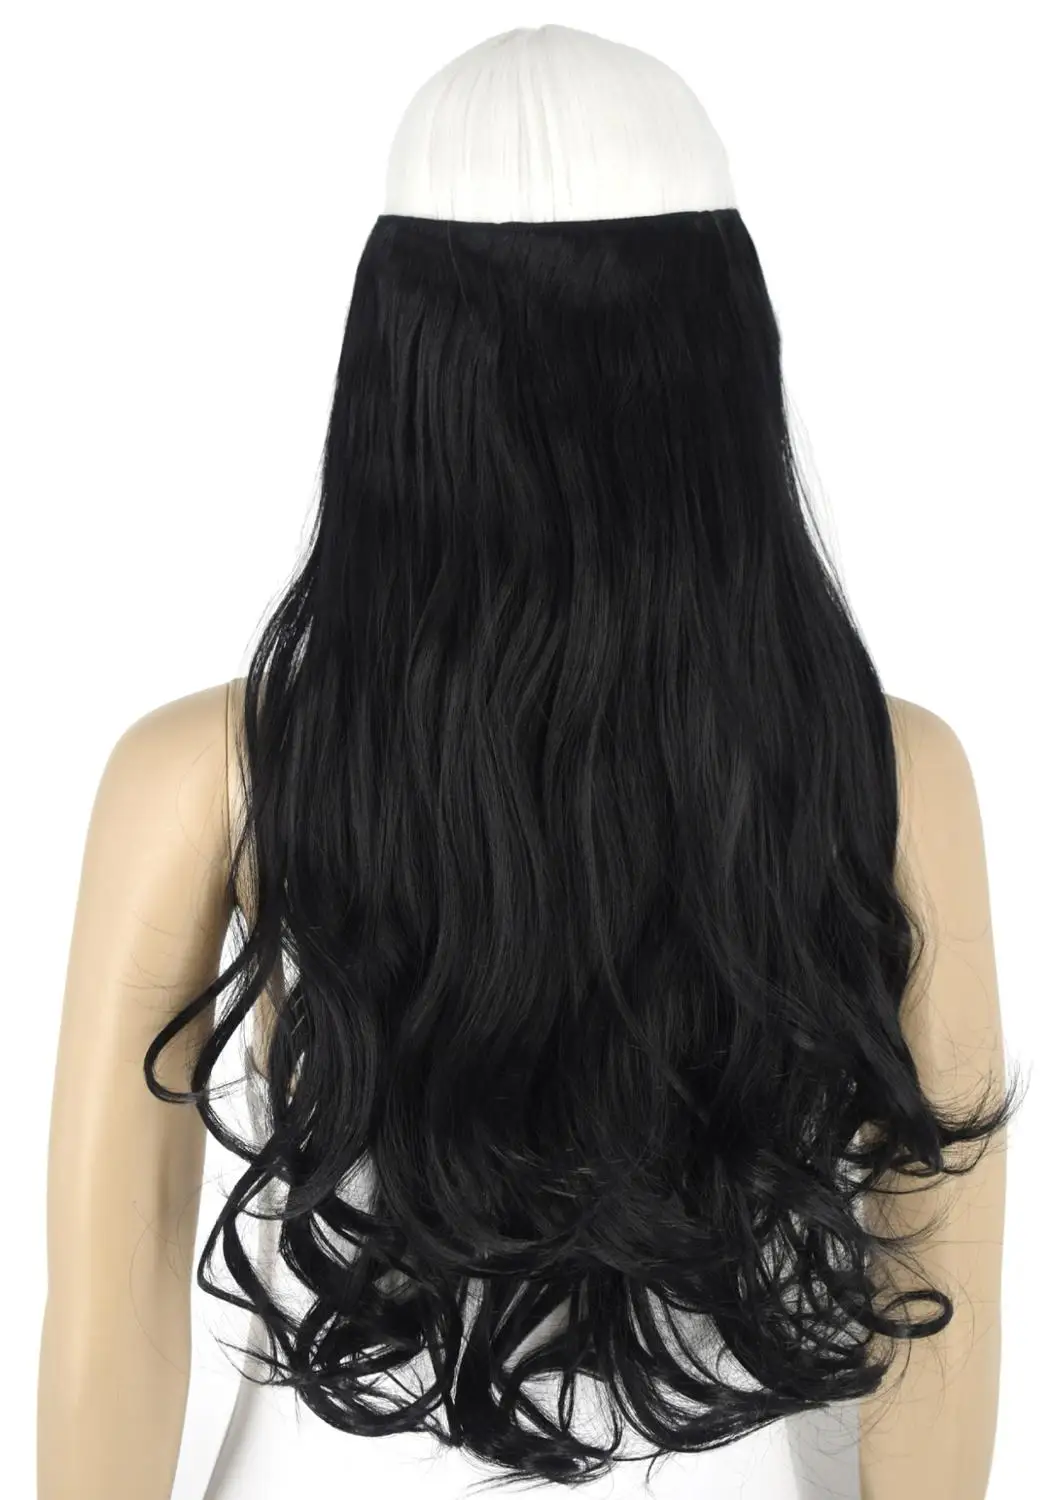 TOPREETY-extensiones de cabello ondulado, fibra sintética resistente al calor, 120gr, 5 clips, 5002